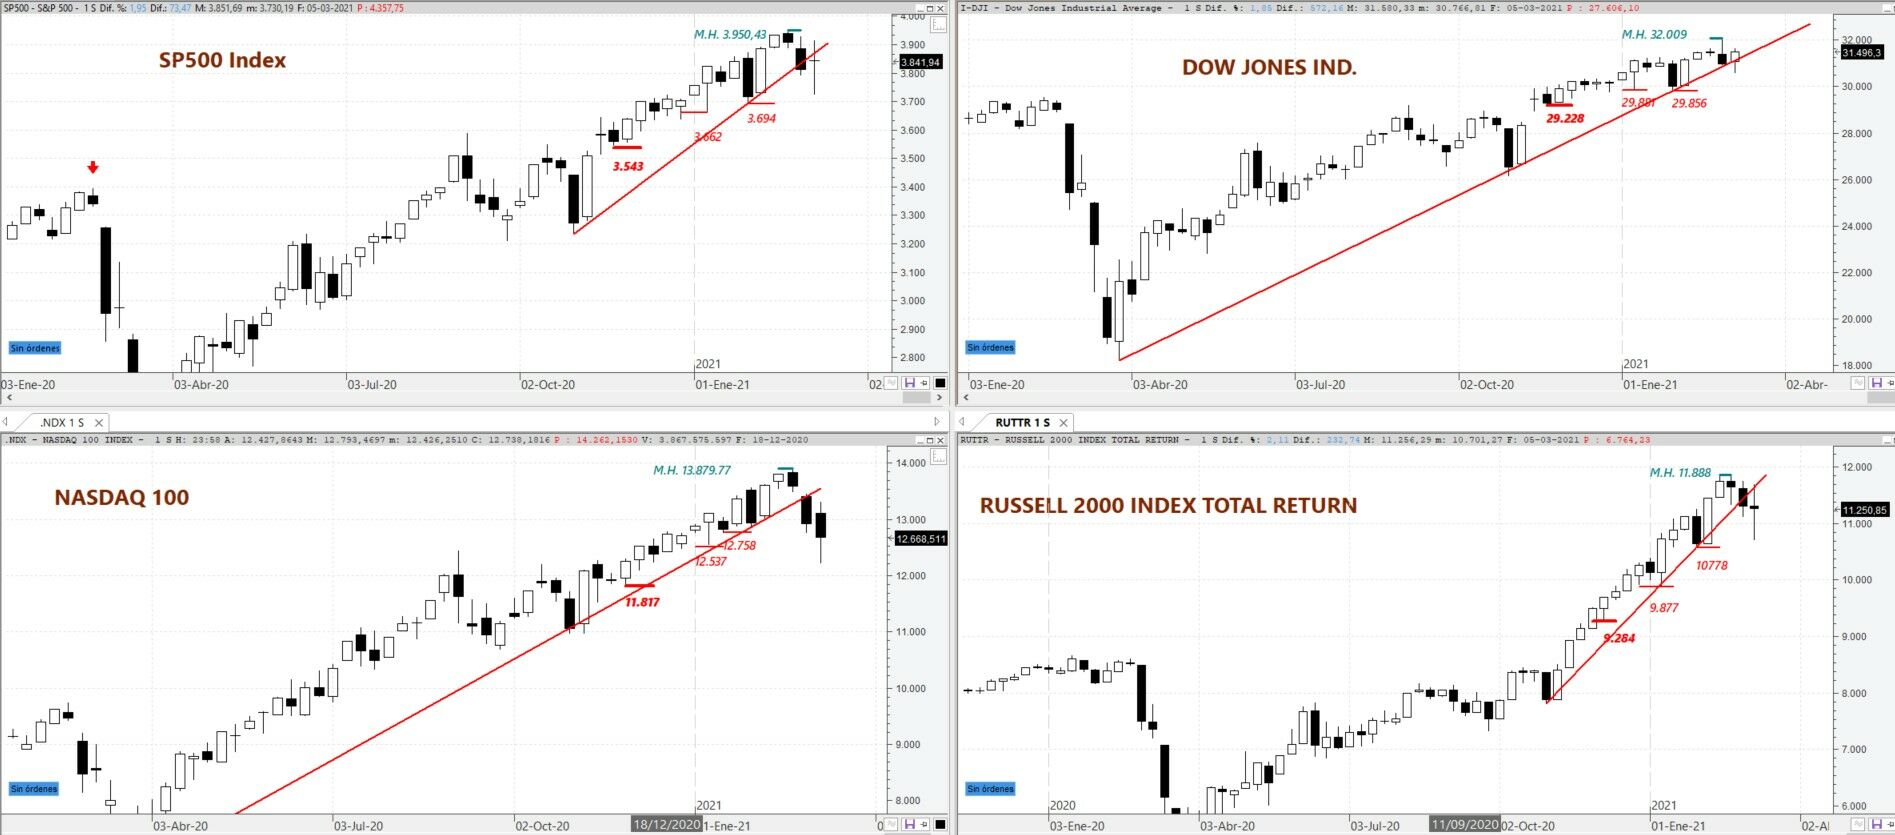 Gráfico semanal S&P 500, DOW JONES Ind, NASDAQ 100 y Russell 2000